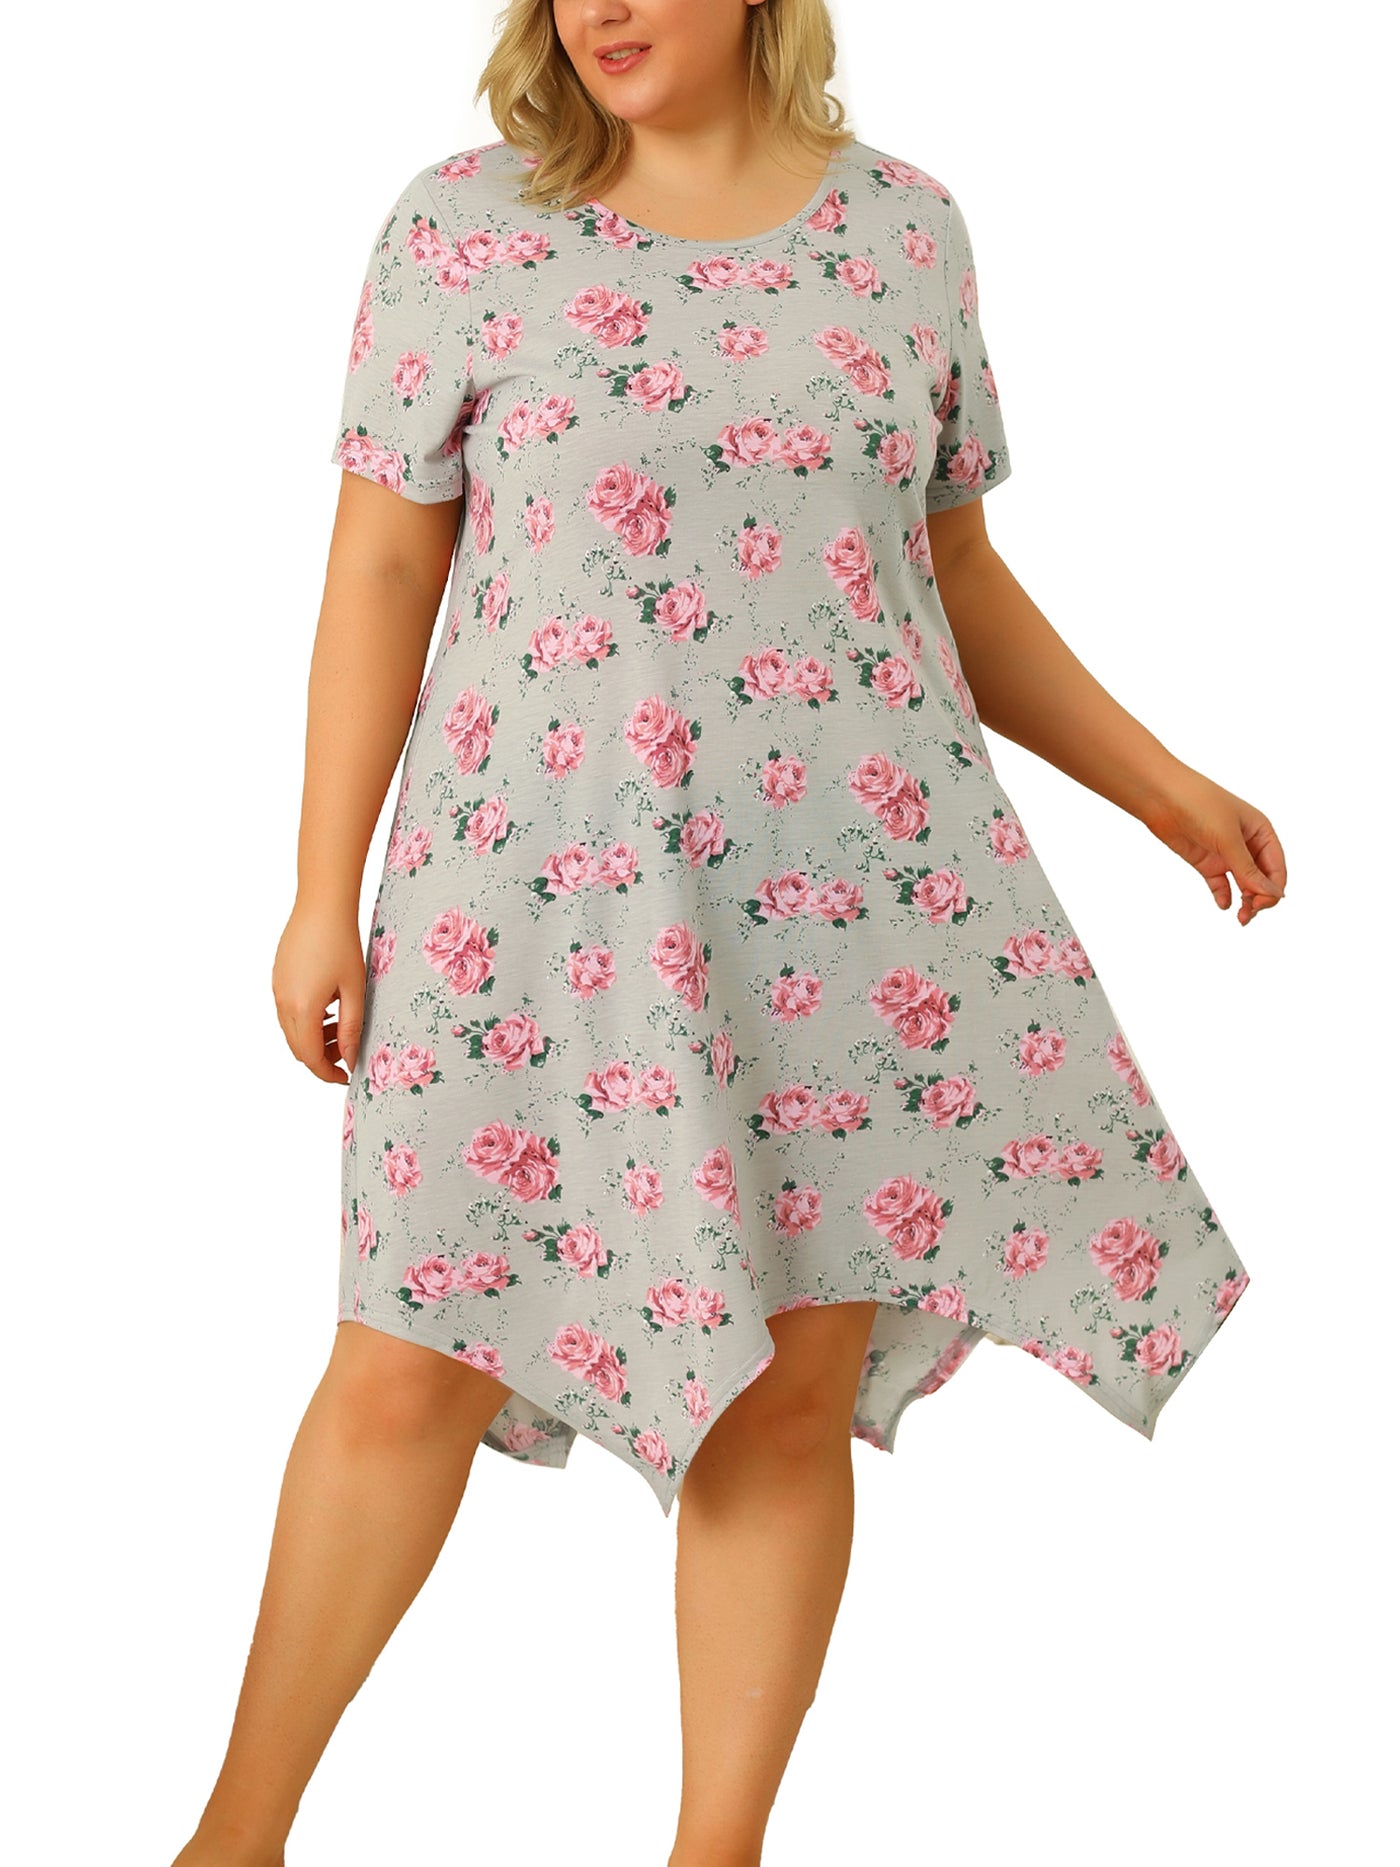 Bublédon Plus Size Floral Nightgown Pajamas Cute Irregular Dress